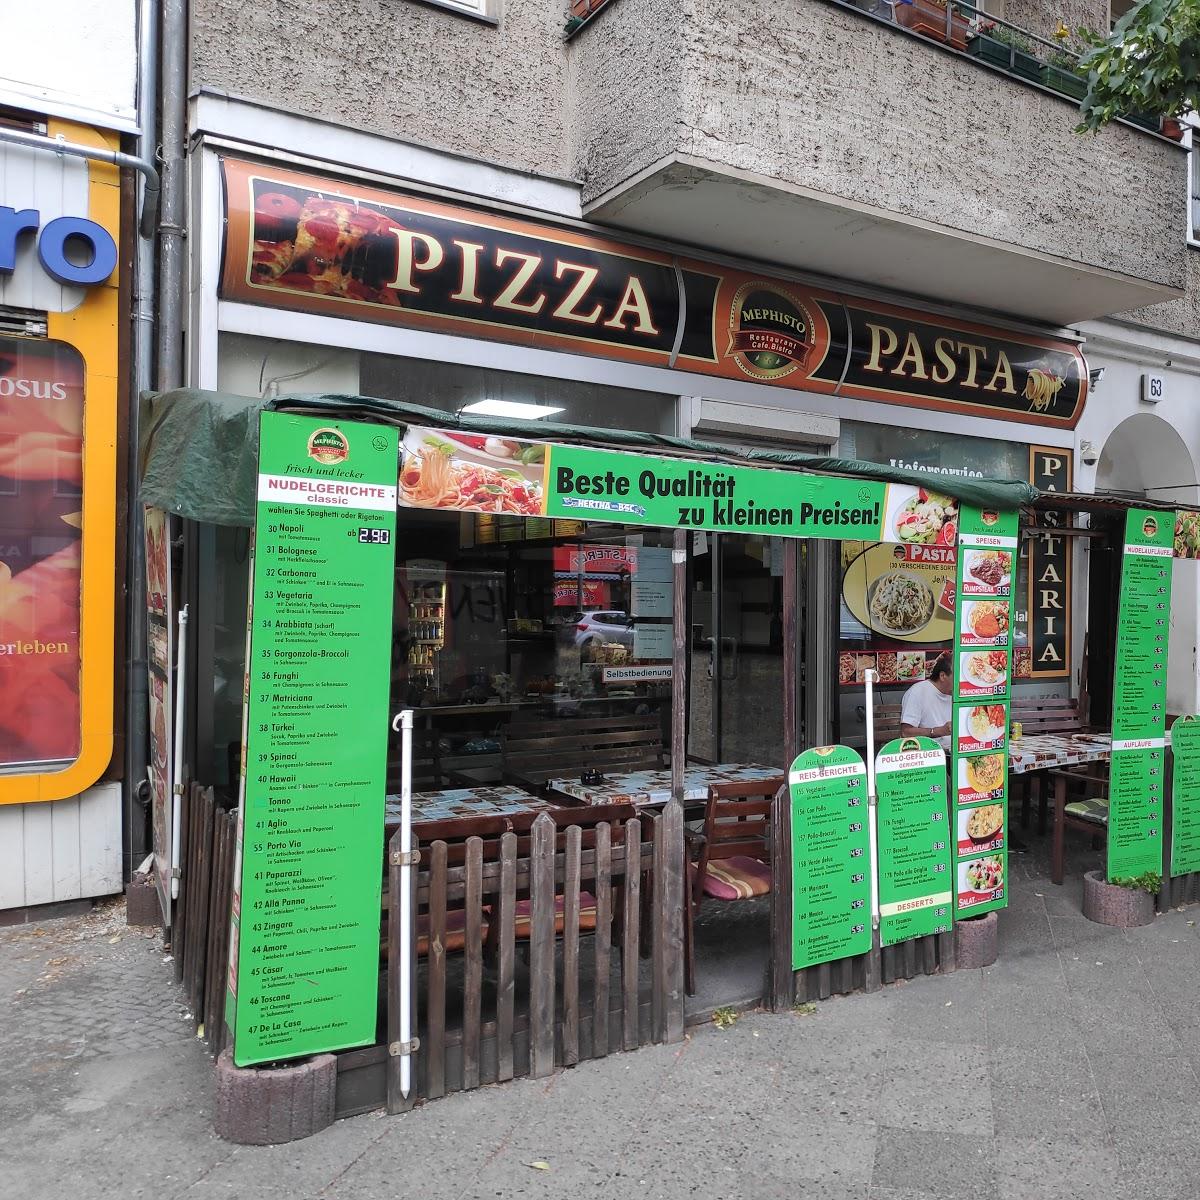 Restaurant "Pizza & Pasta Mephisto" in Berlin